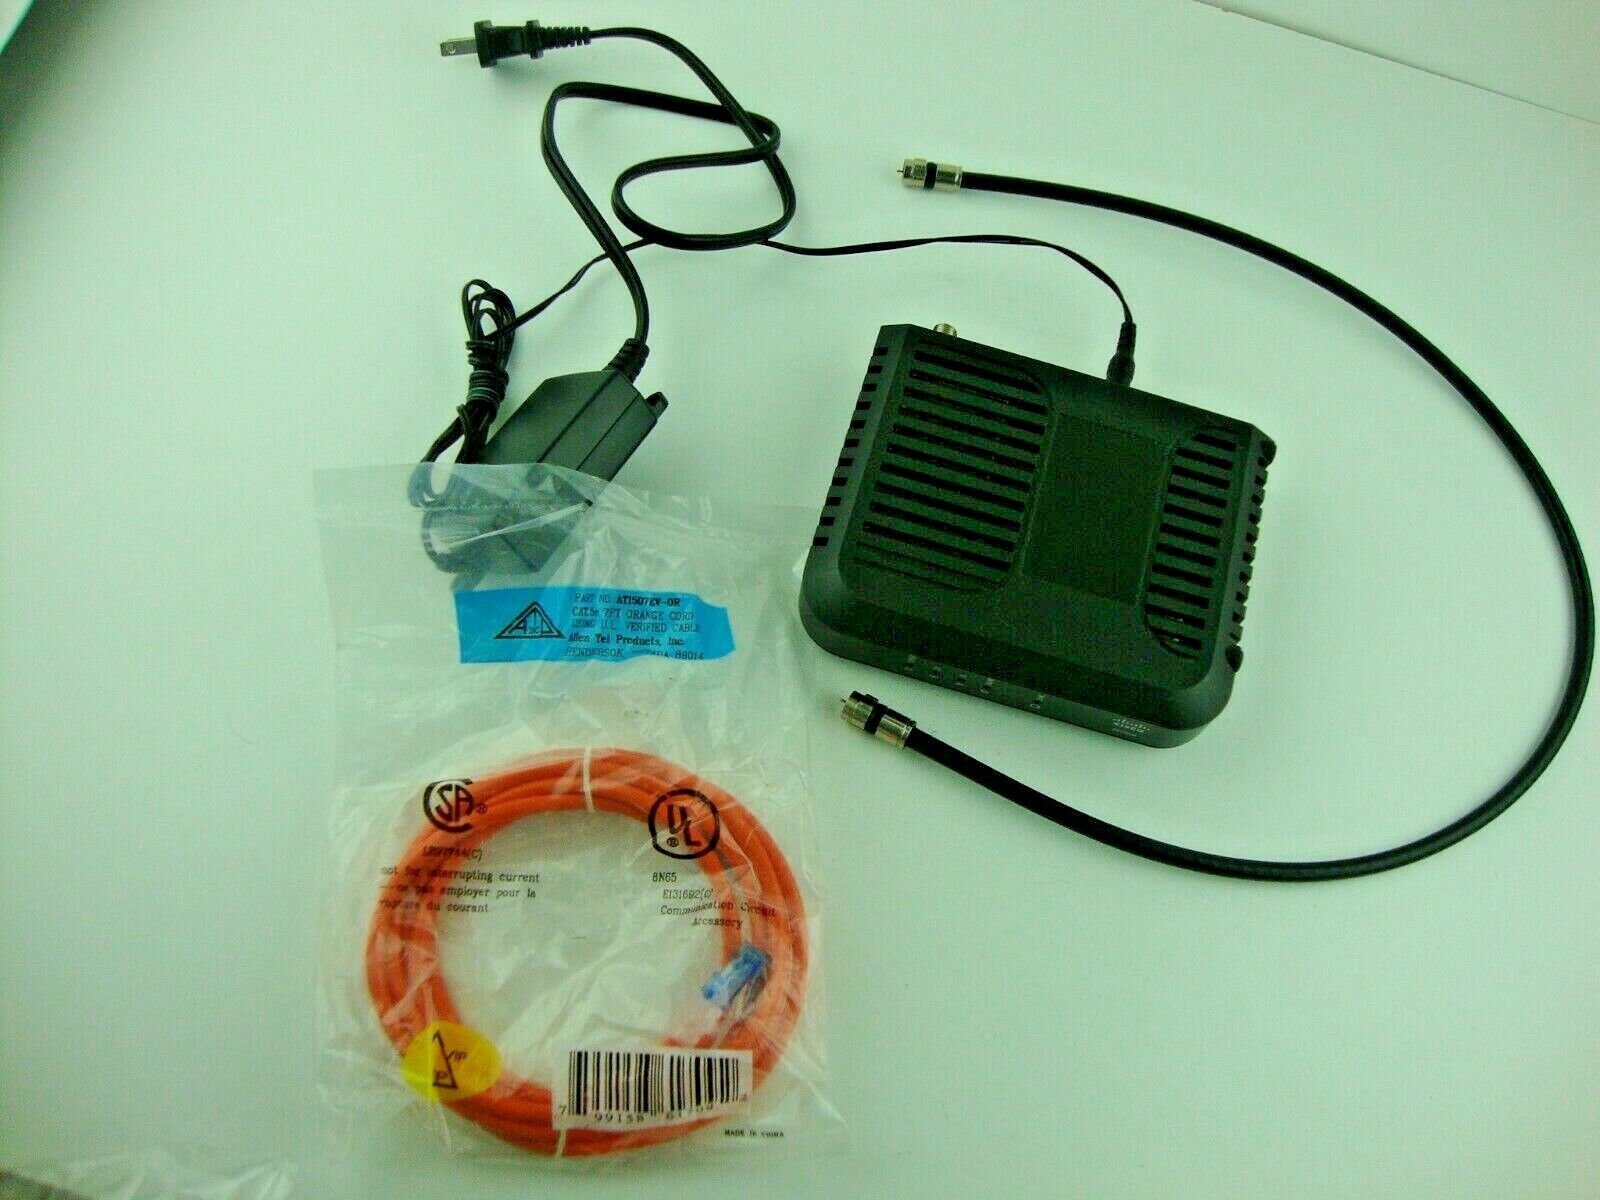 Cisco DPC3008 Cable Modem Power Supply Cat 5 Cable & Cable Xfinity COX Spectrum